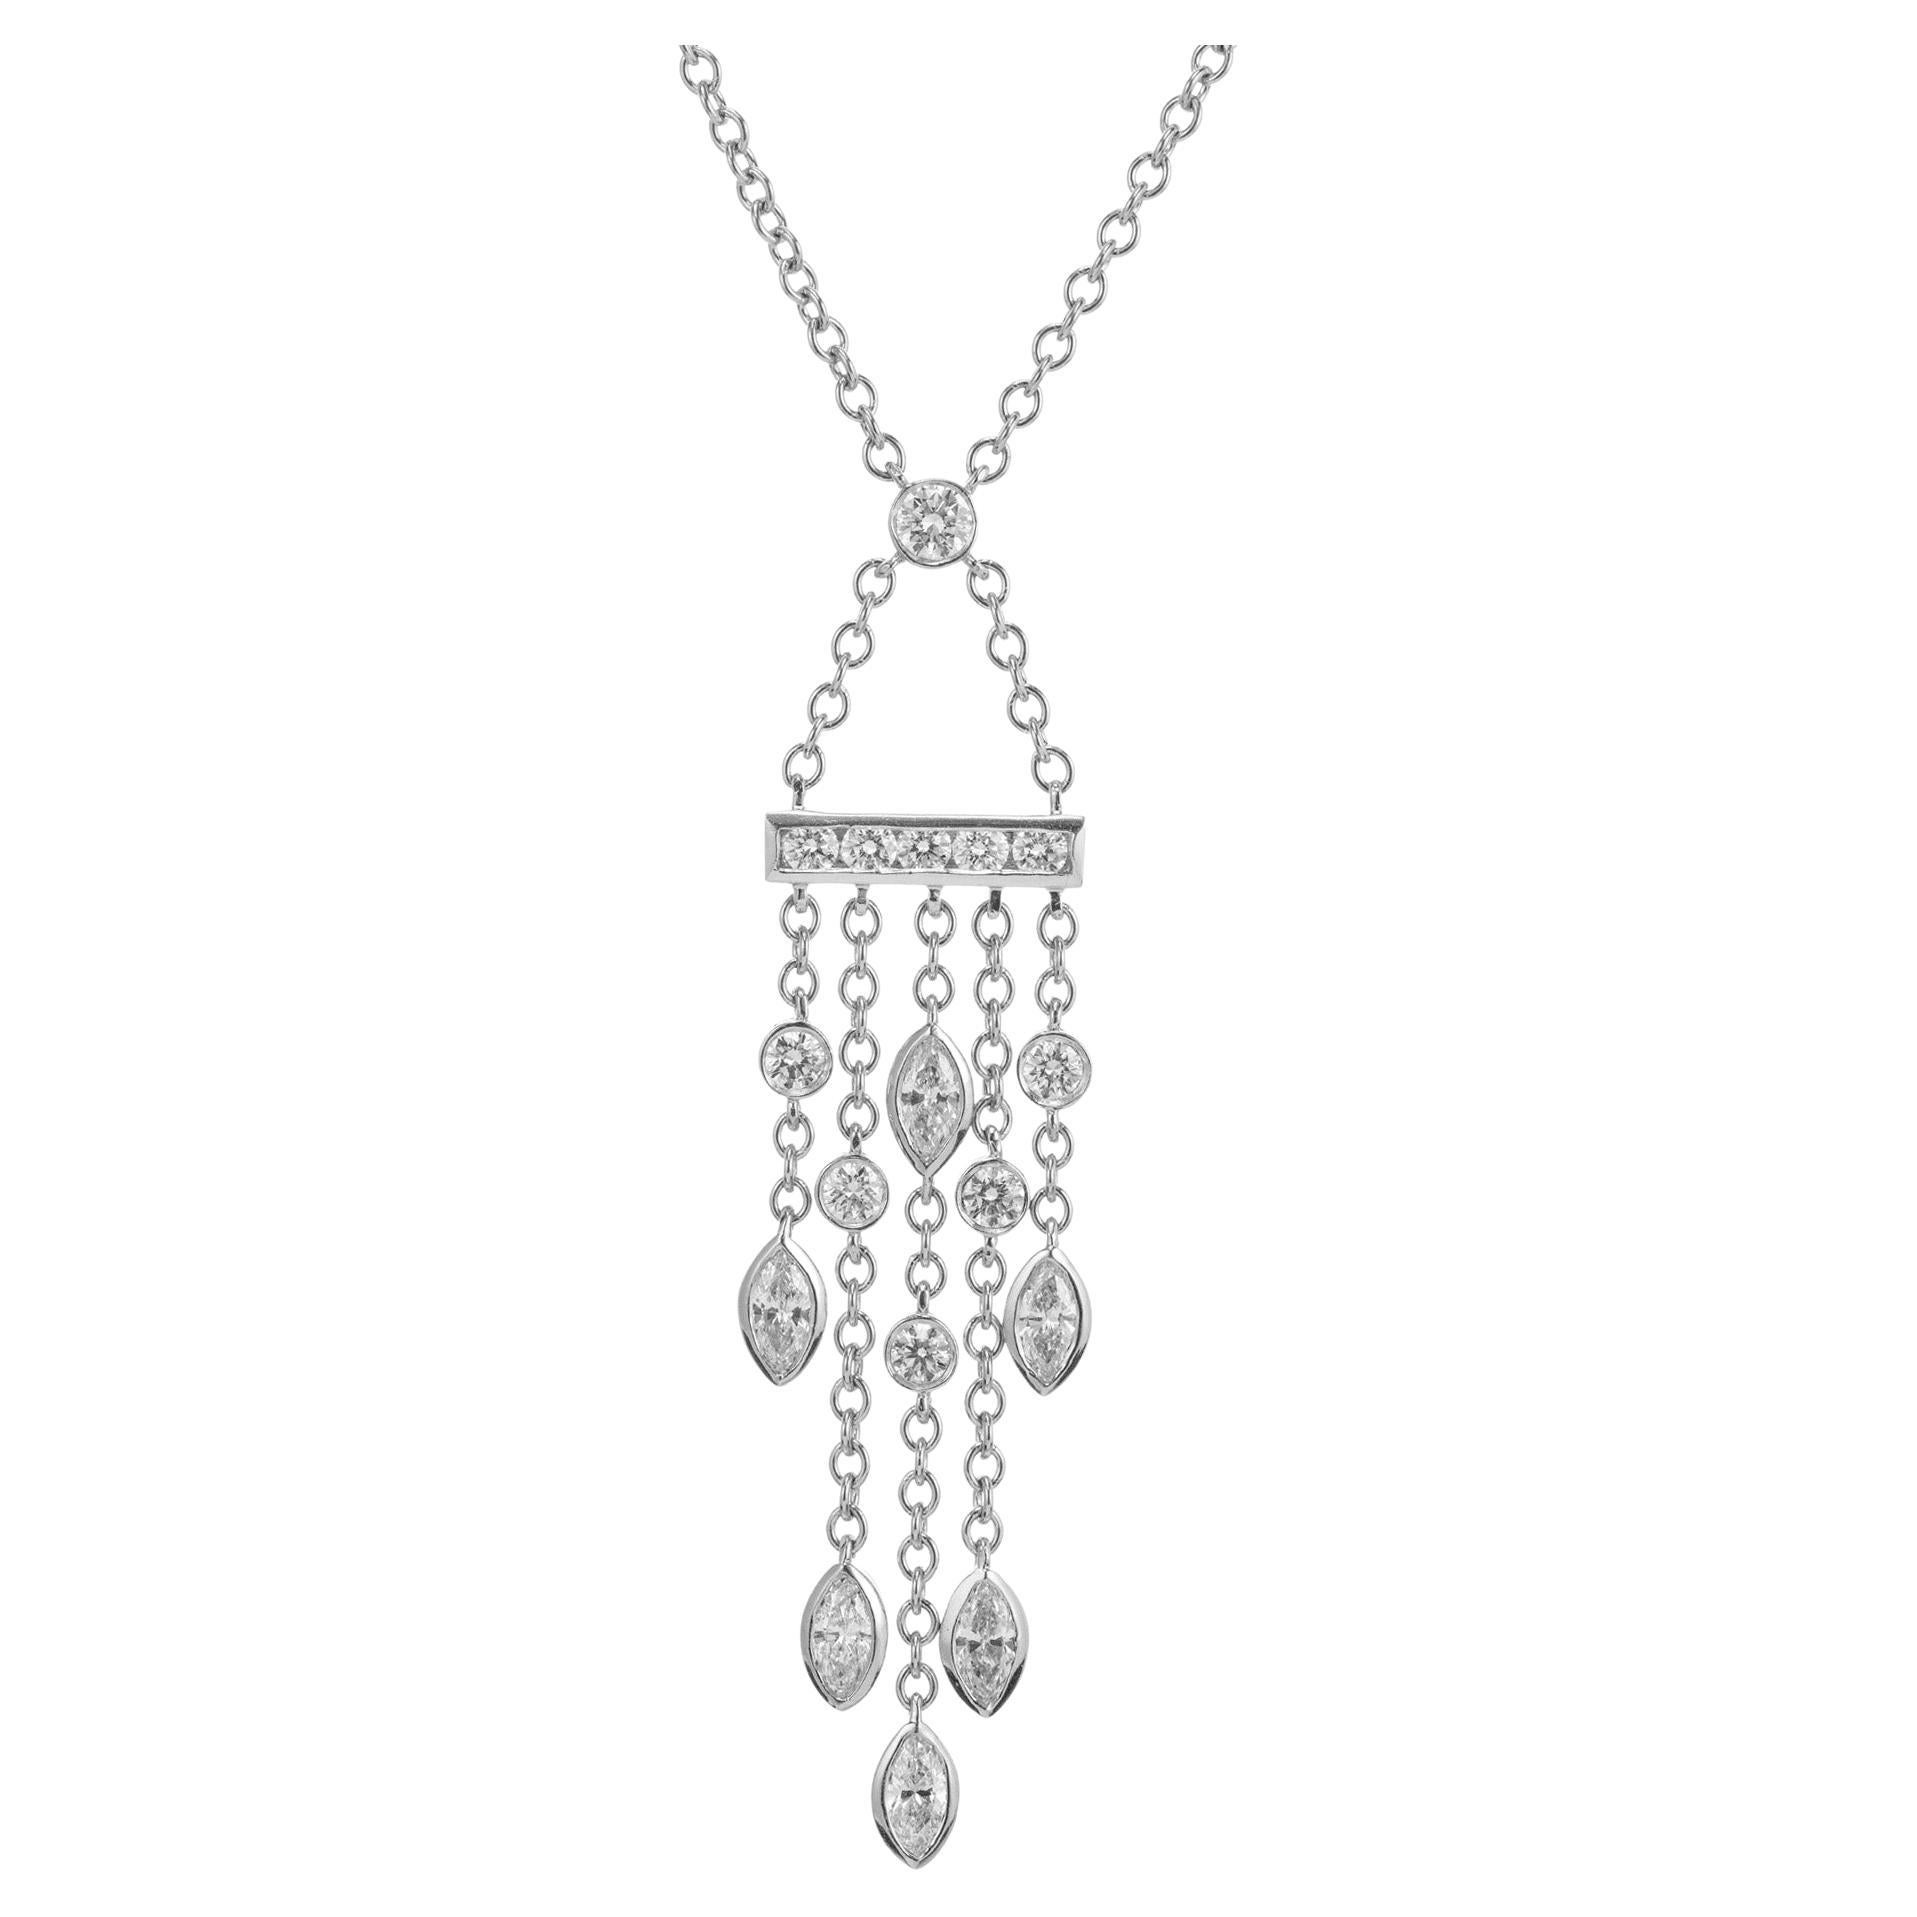 Tiffany & Co. .99 Carat Diamond Platinum Swing Drop Pendant Necklace